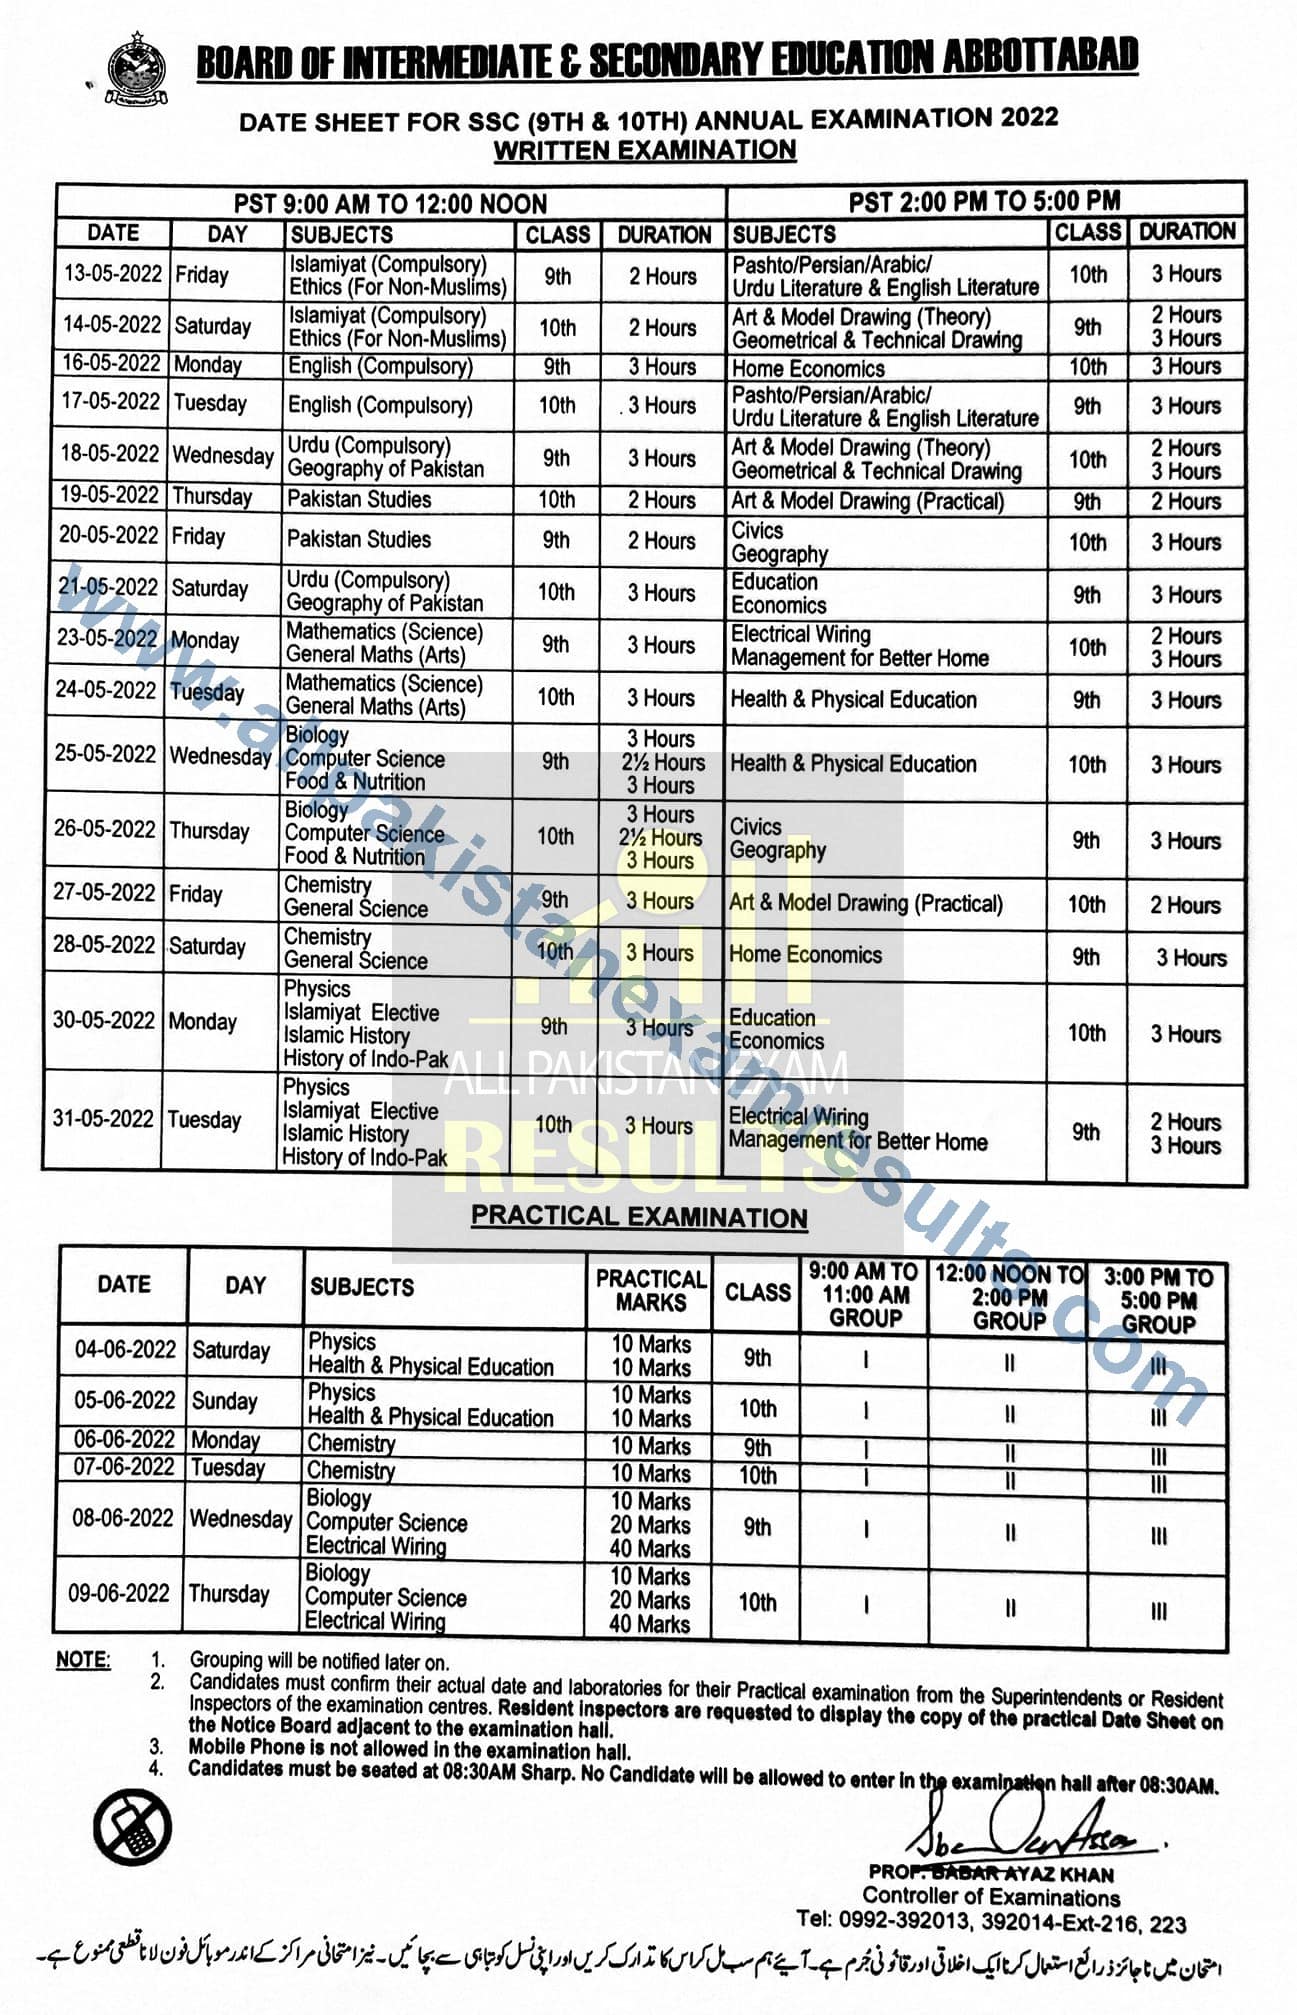 Date Sheet 2022 Class 9th & Class 10th Abbottabad Board Annual Exam